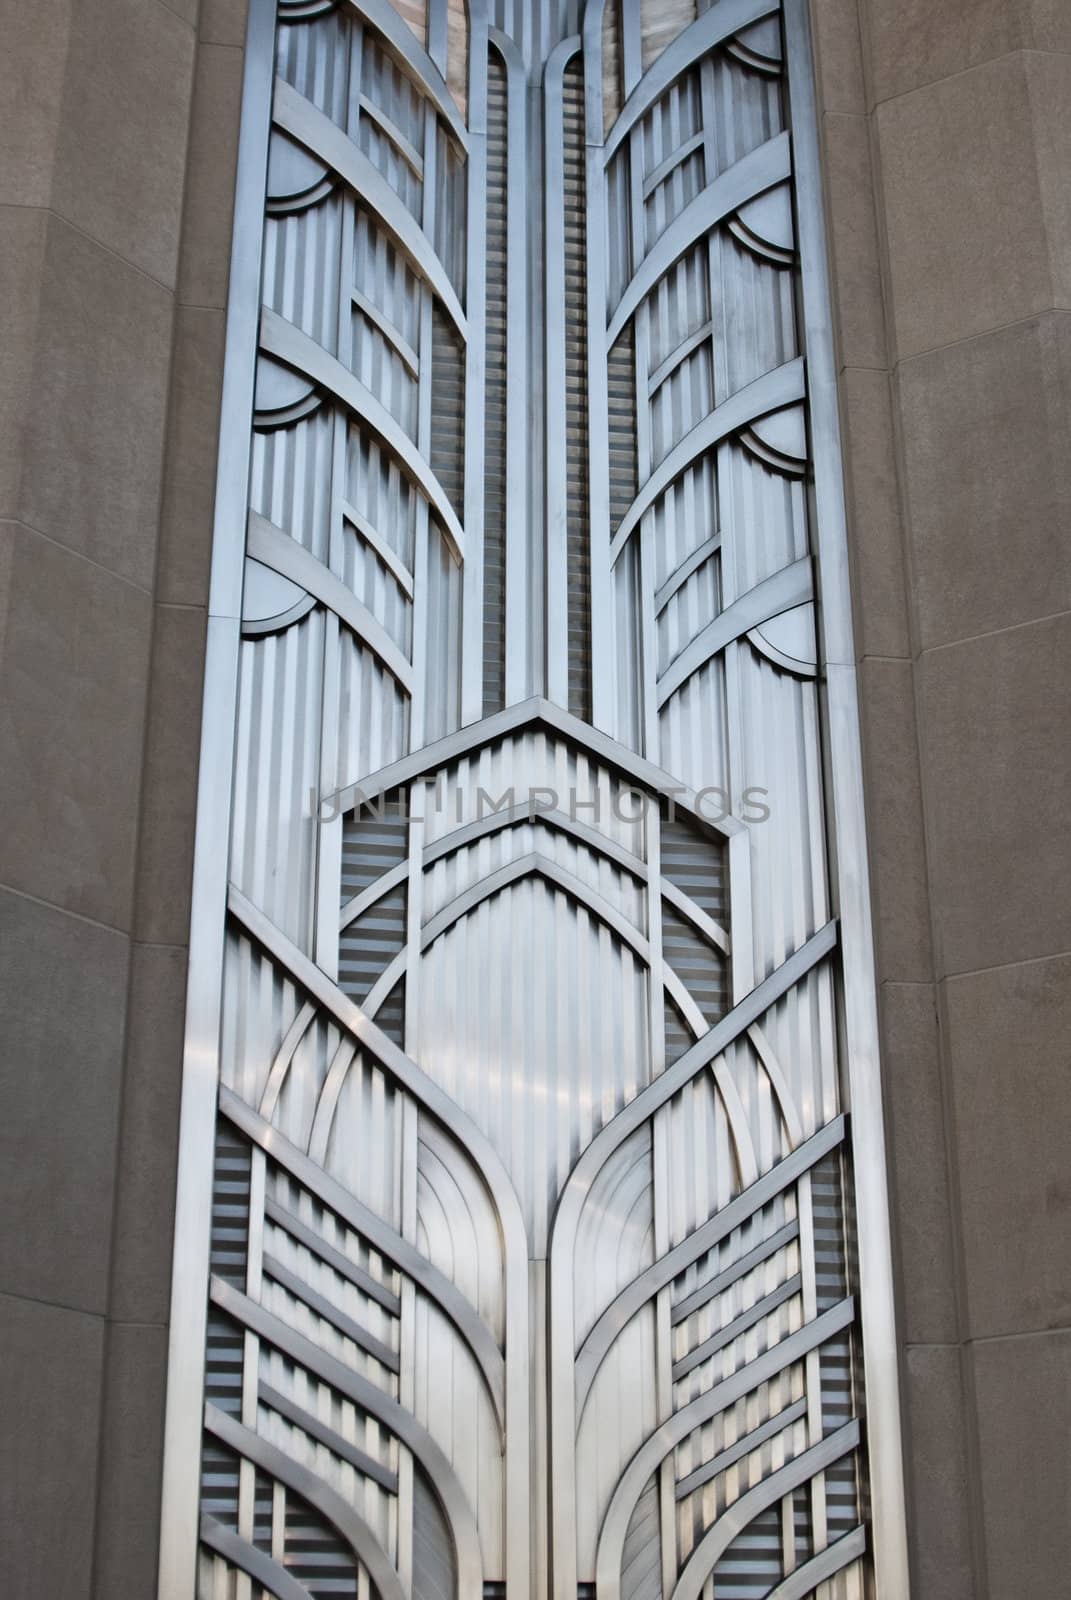 Panel of silver metal work in lieu of window